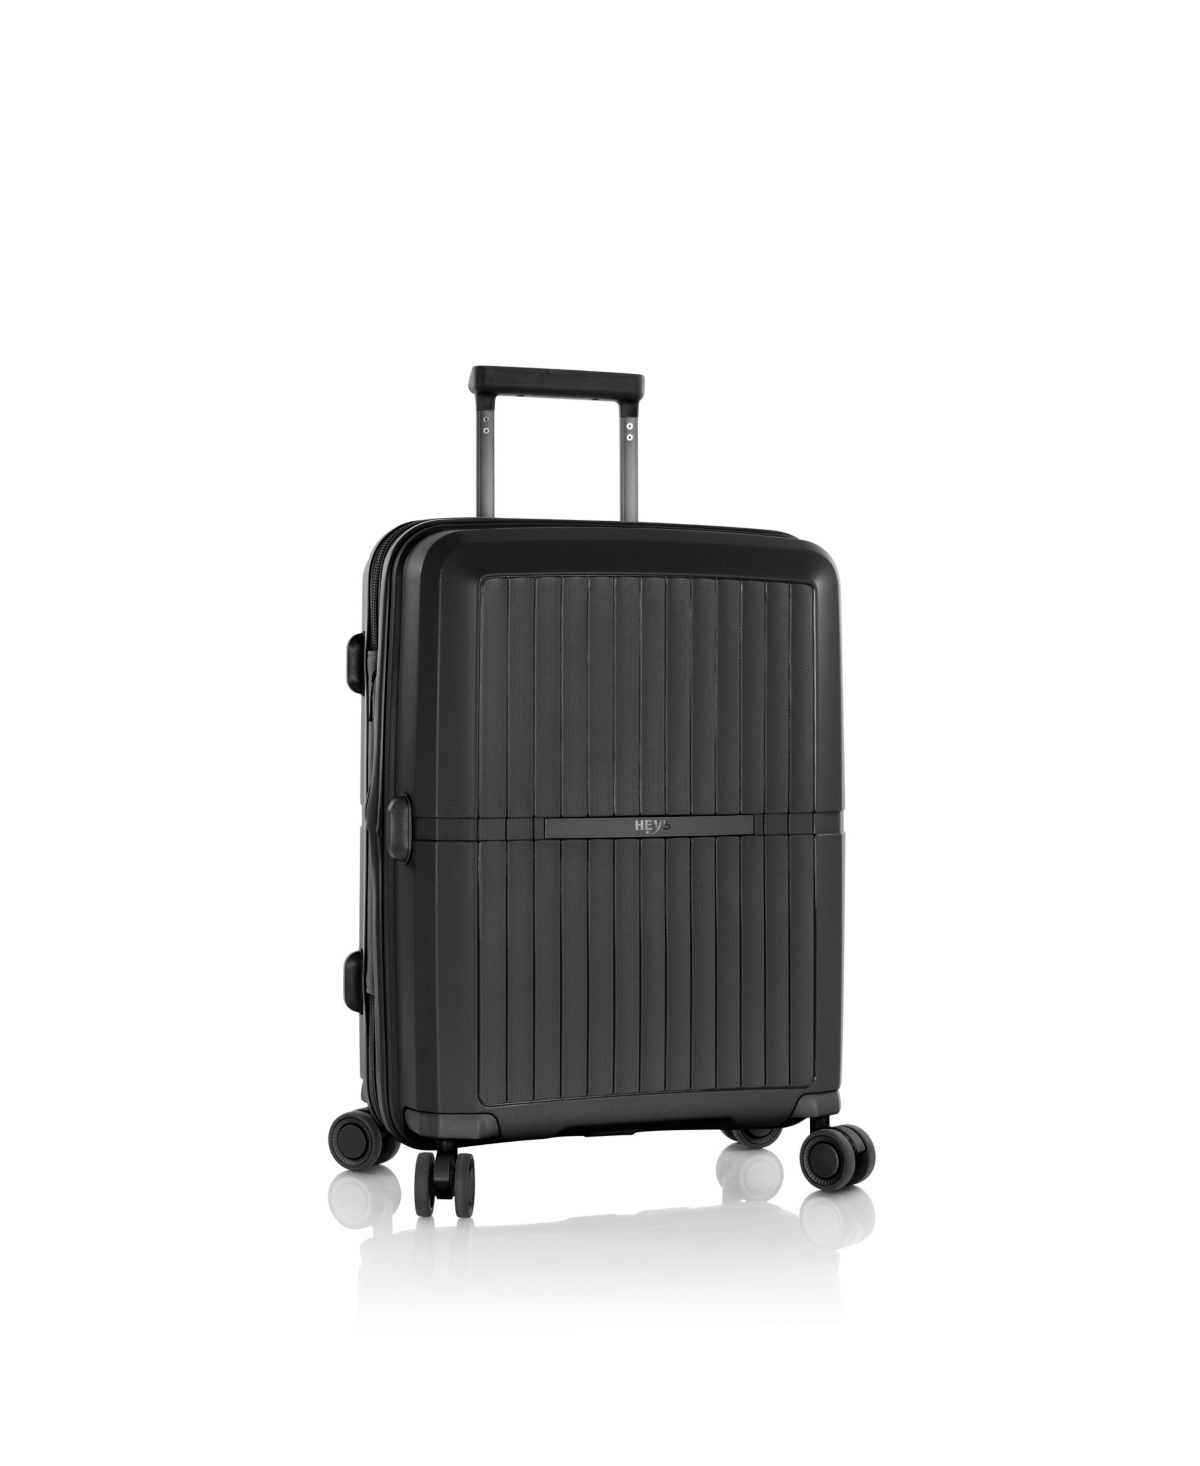 AirLite 21" Hardside Carry-On Spinner Luggage - Black